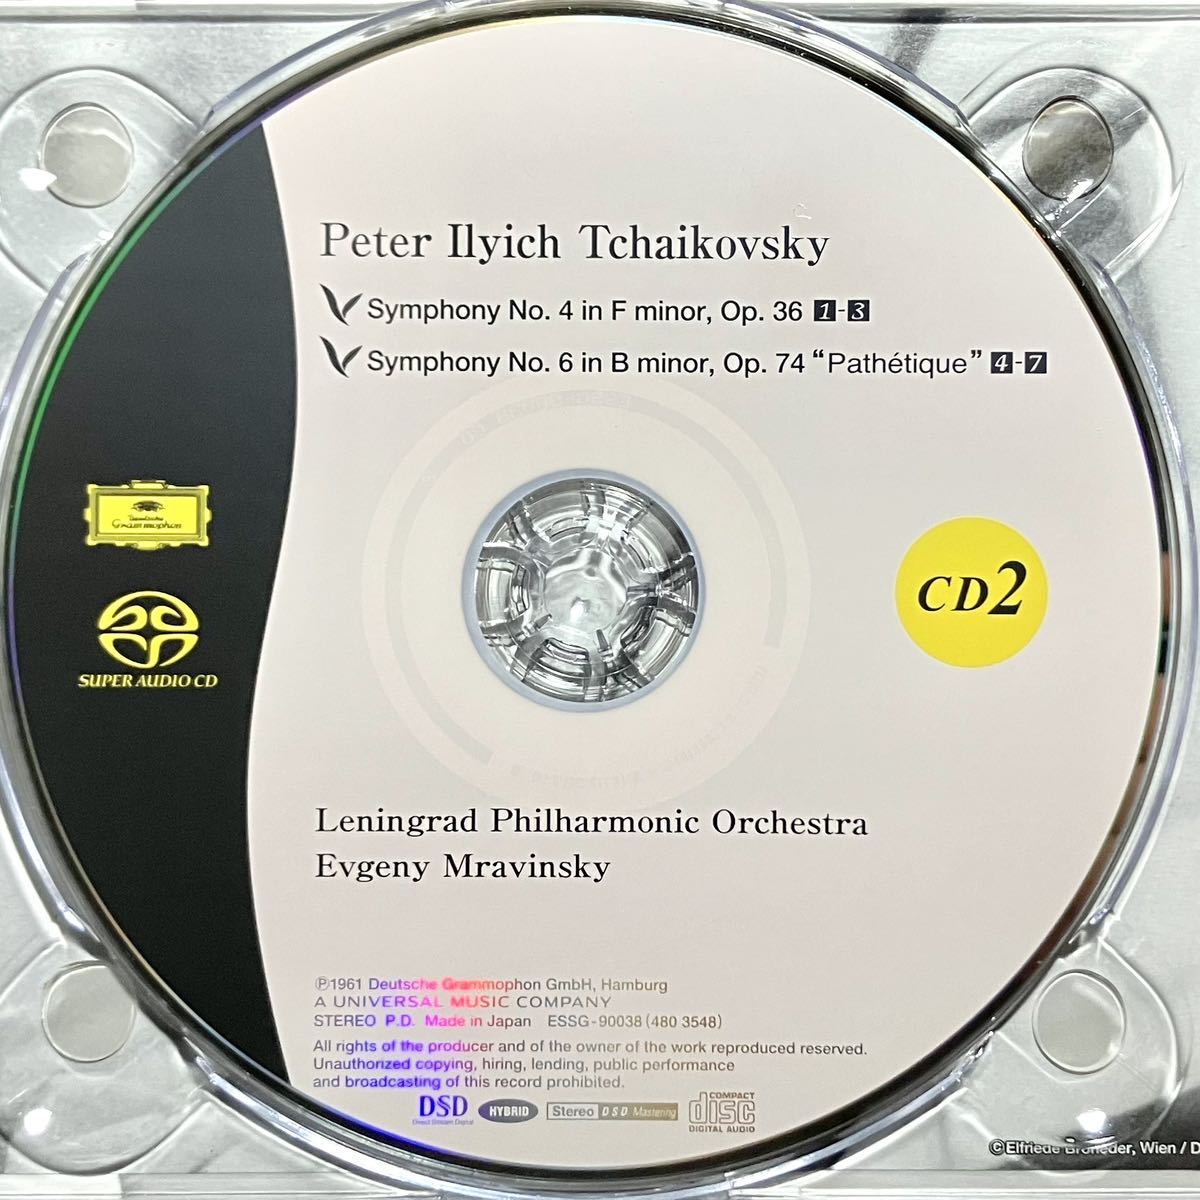 ESOTERIC SACD ムラヴィンスキー / チャイコフスキー 交響曲 第4番・第 